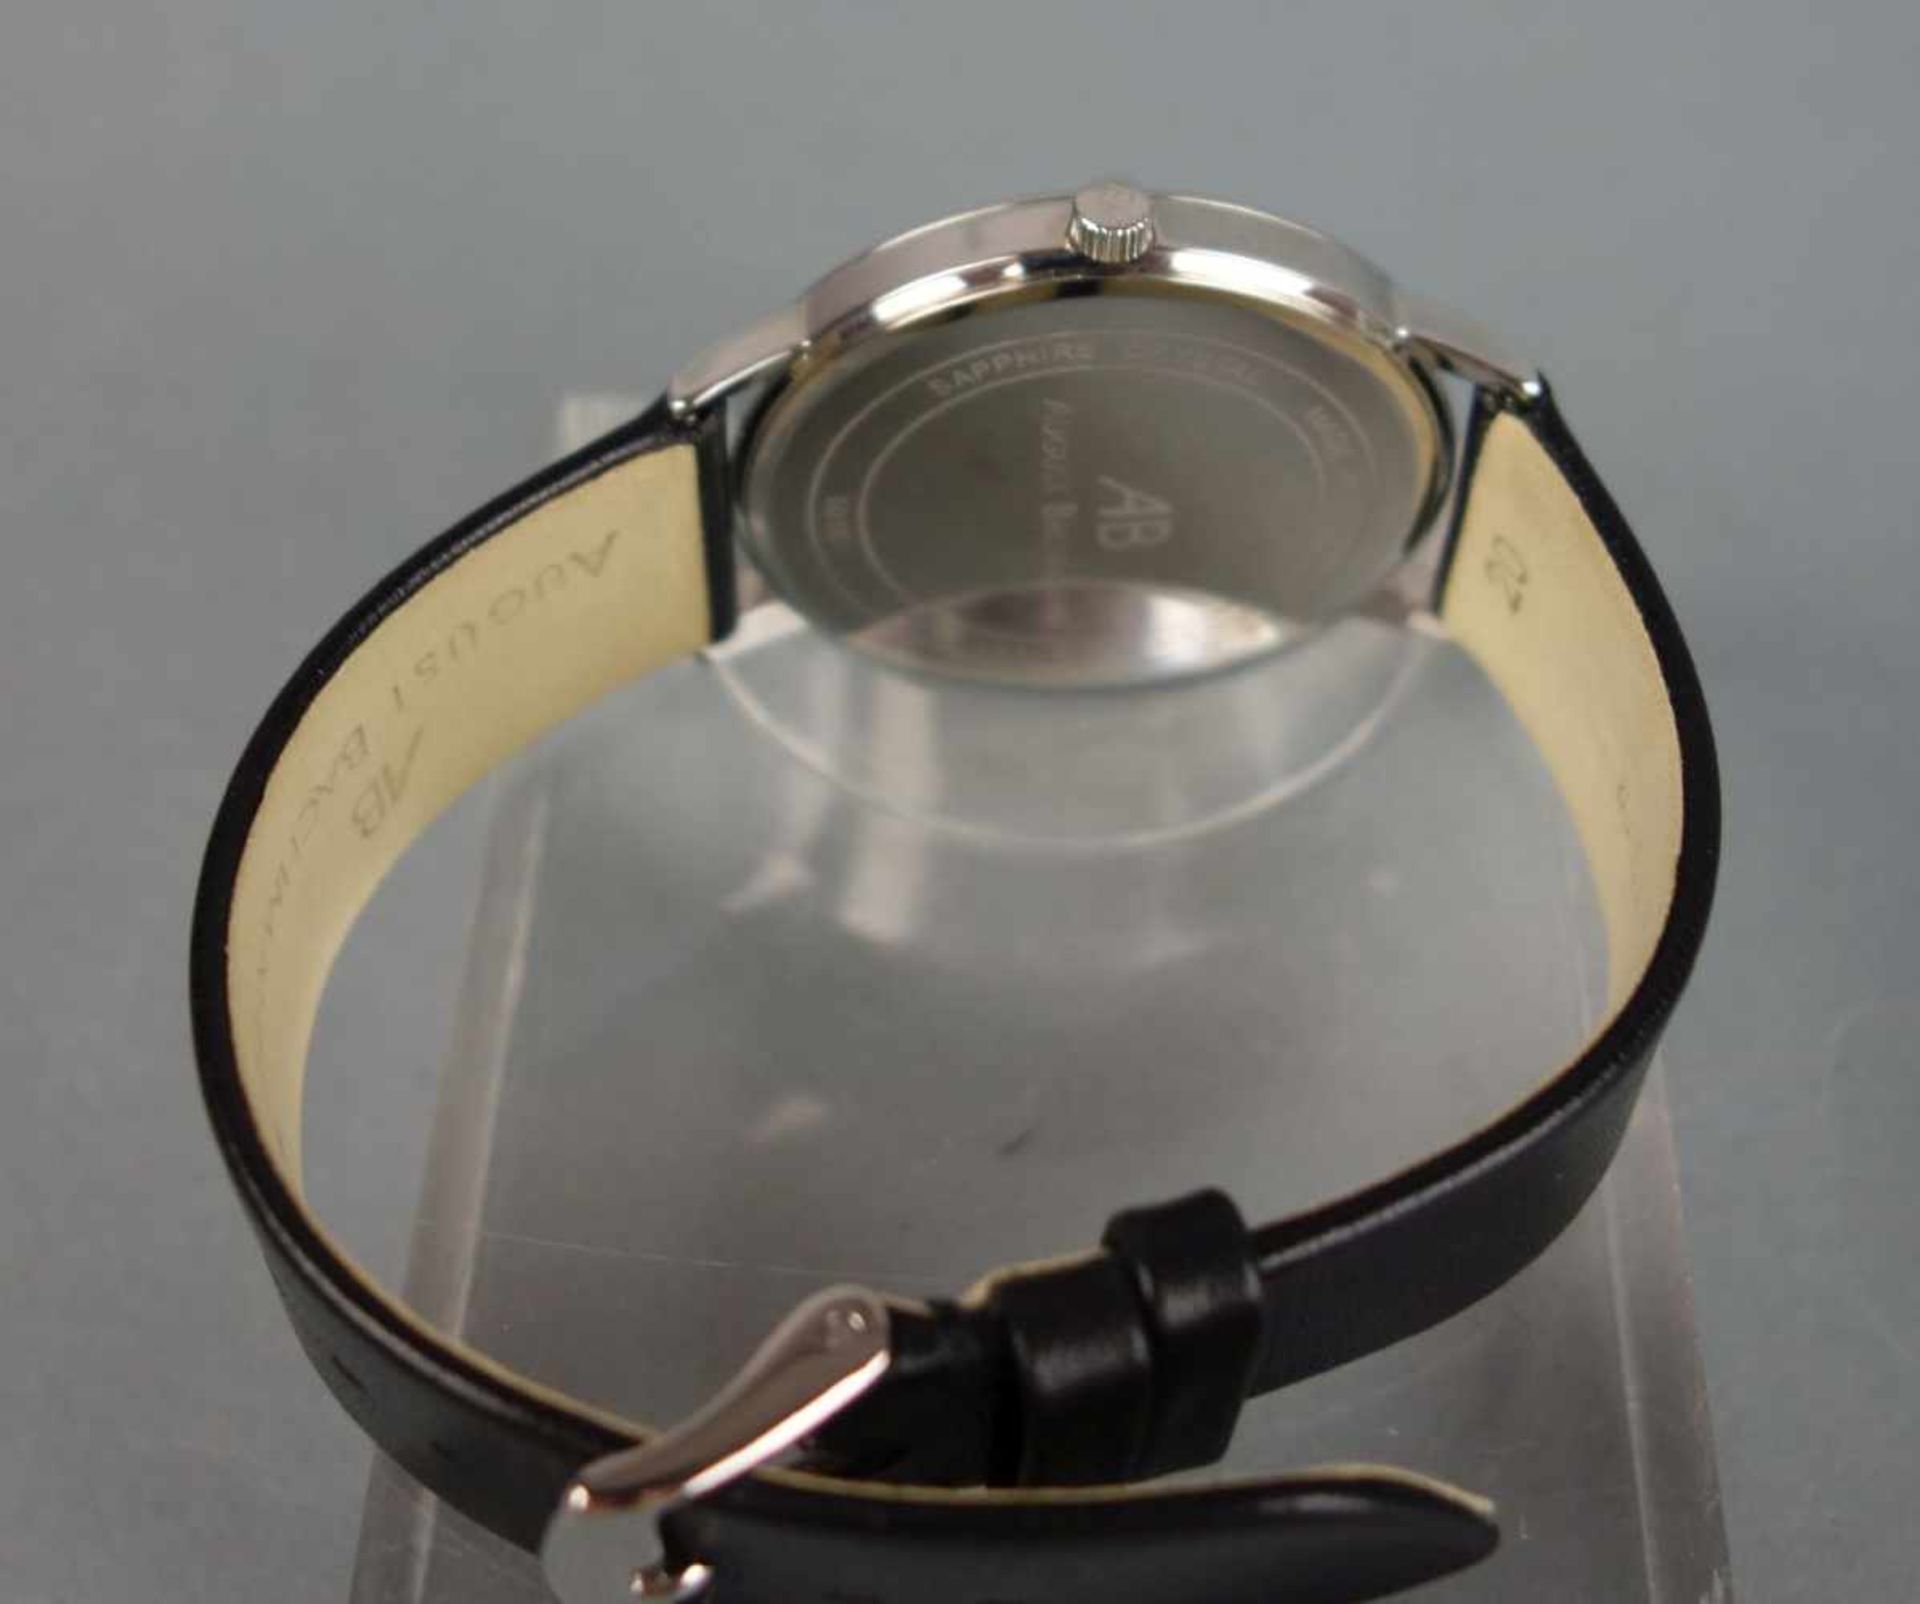 ARMBANDUHR / wristwatch, Quarz-Uhr, Manufaktur August Bachmann / Deutschland. Modell "10101.35. - Image 3 of 4